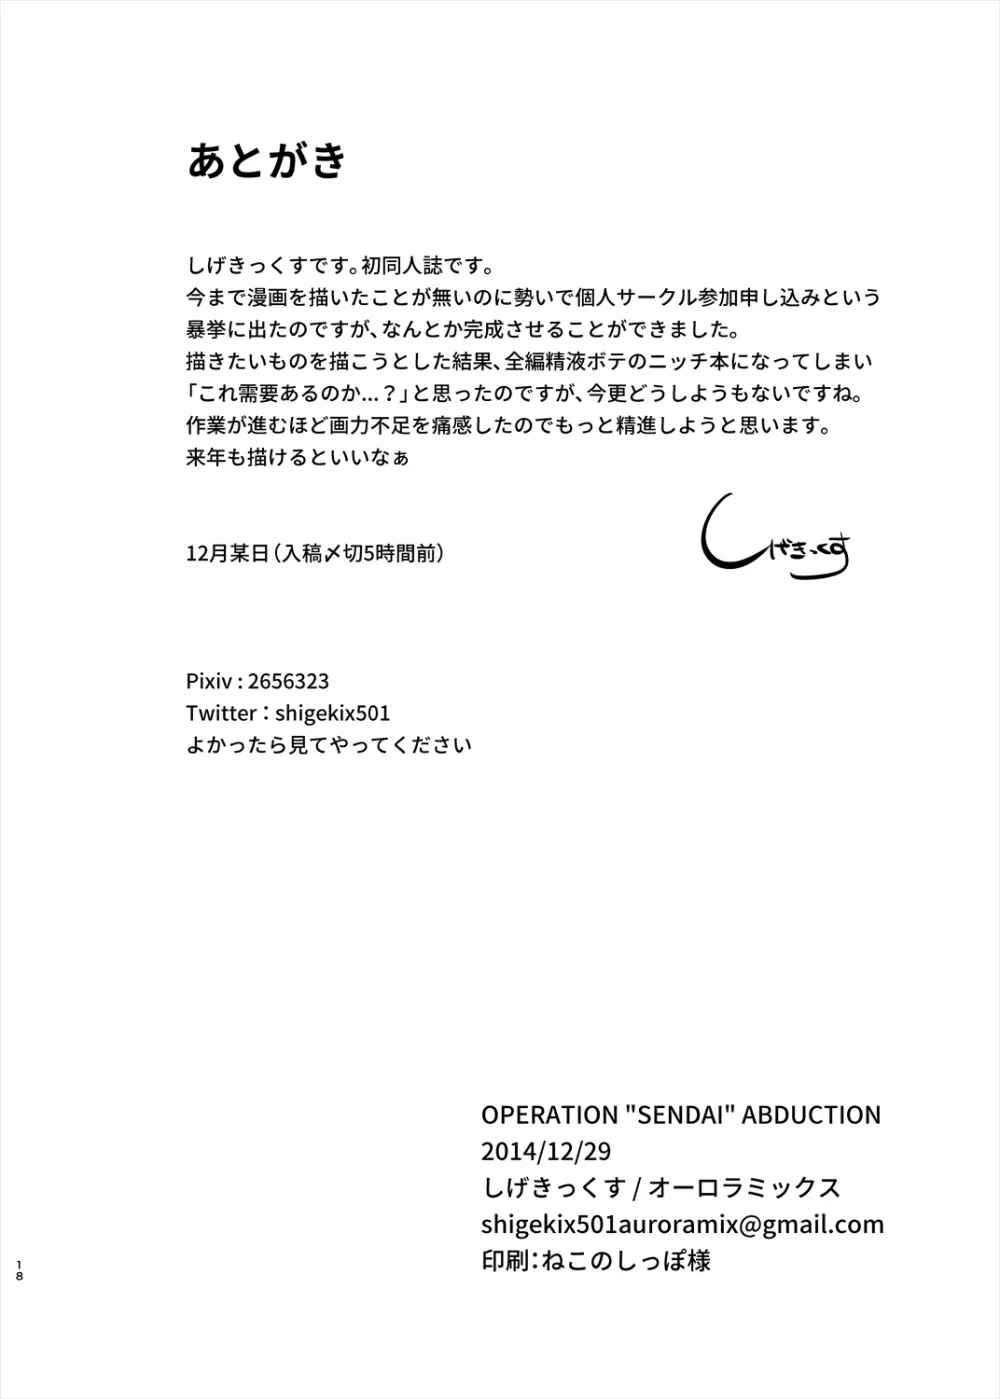 OPERATION “SENDAI” ABDUCTION 17ページ